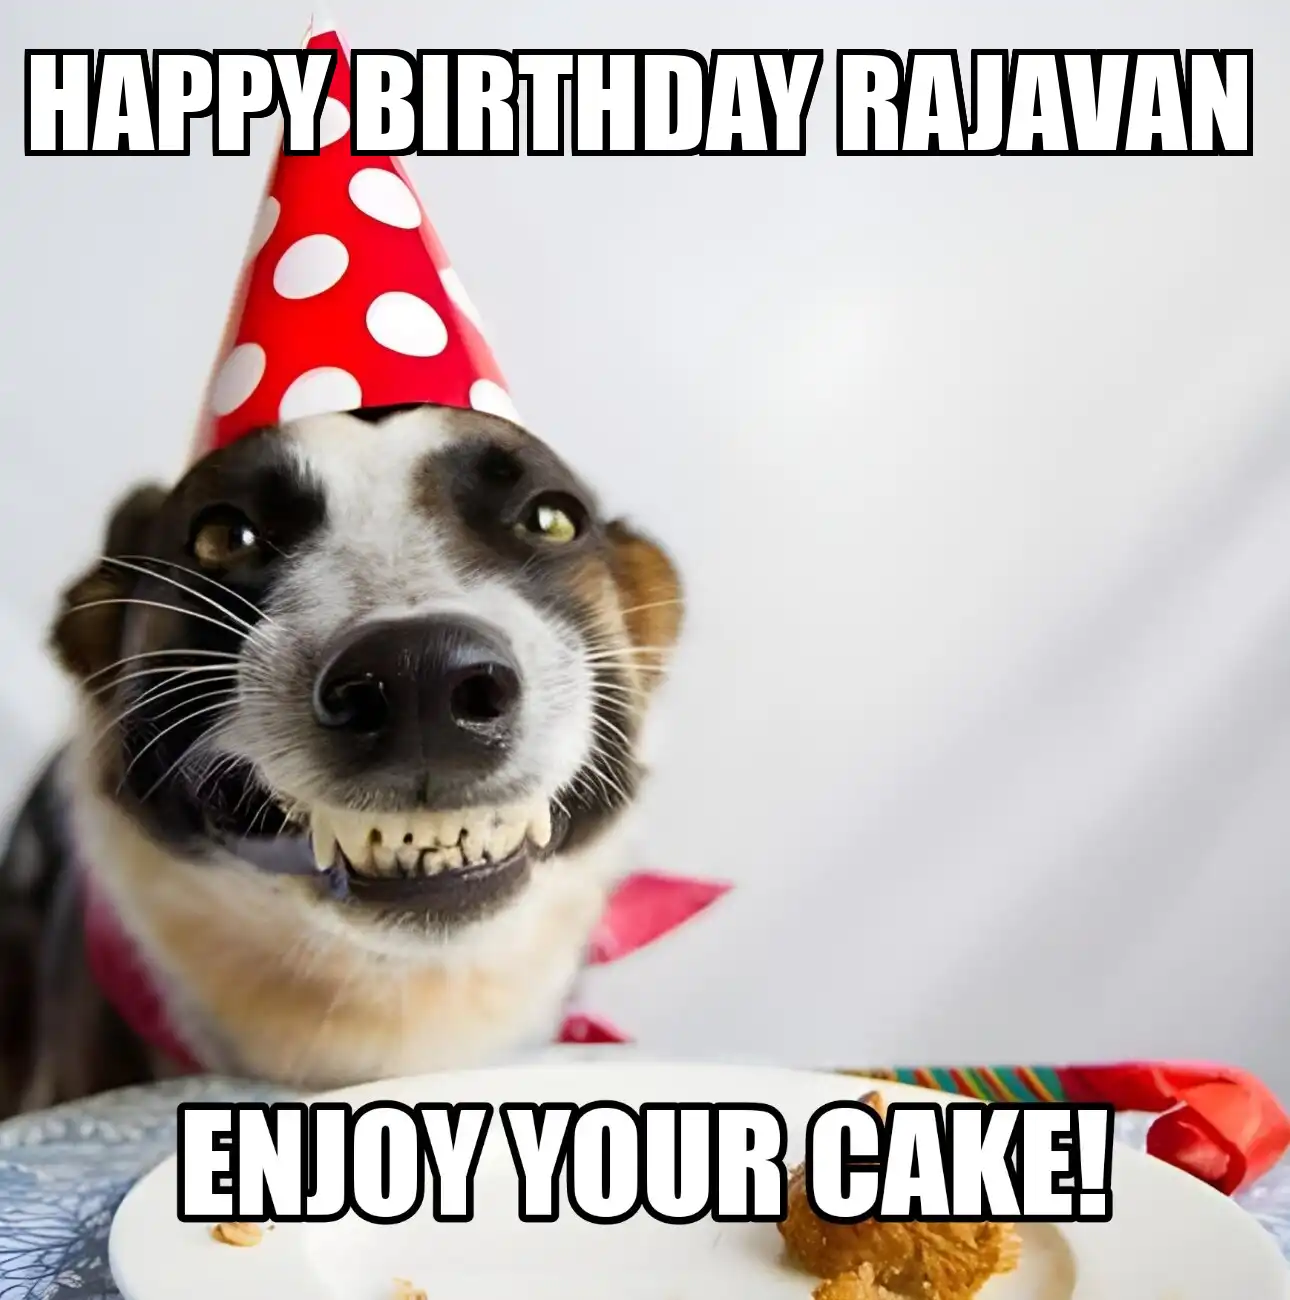 Happy Birthday Rajavan Enjoy Your Cake Dog Meme